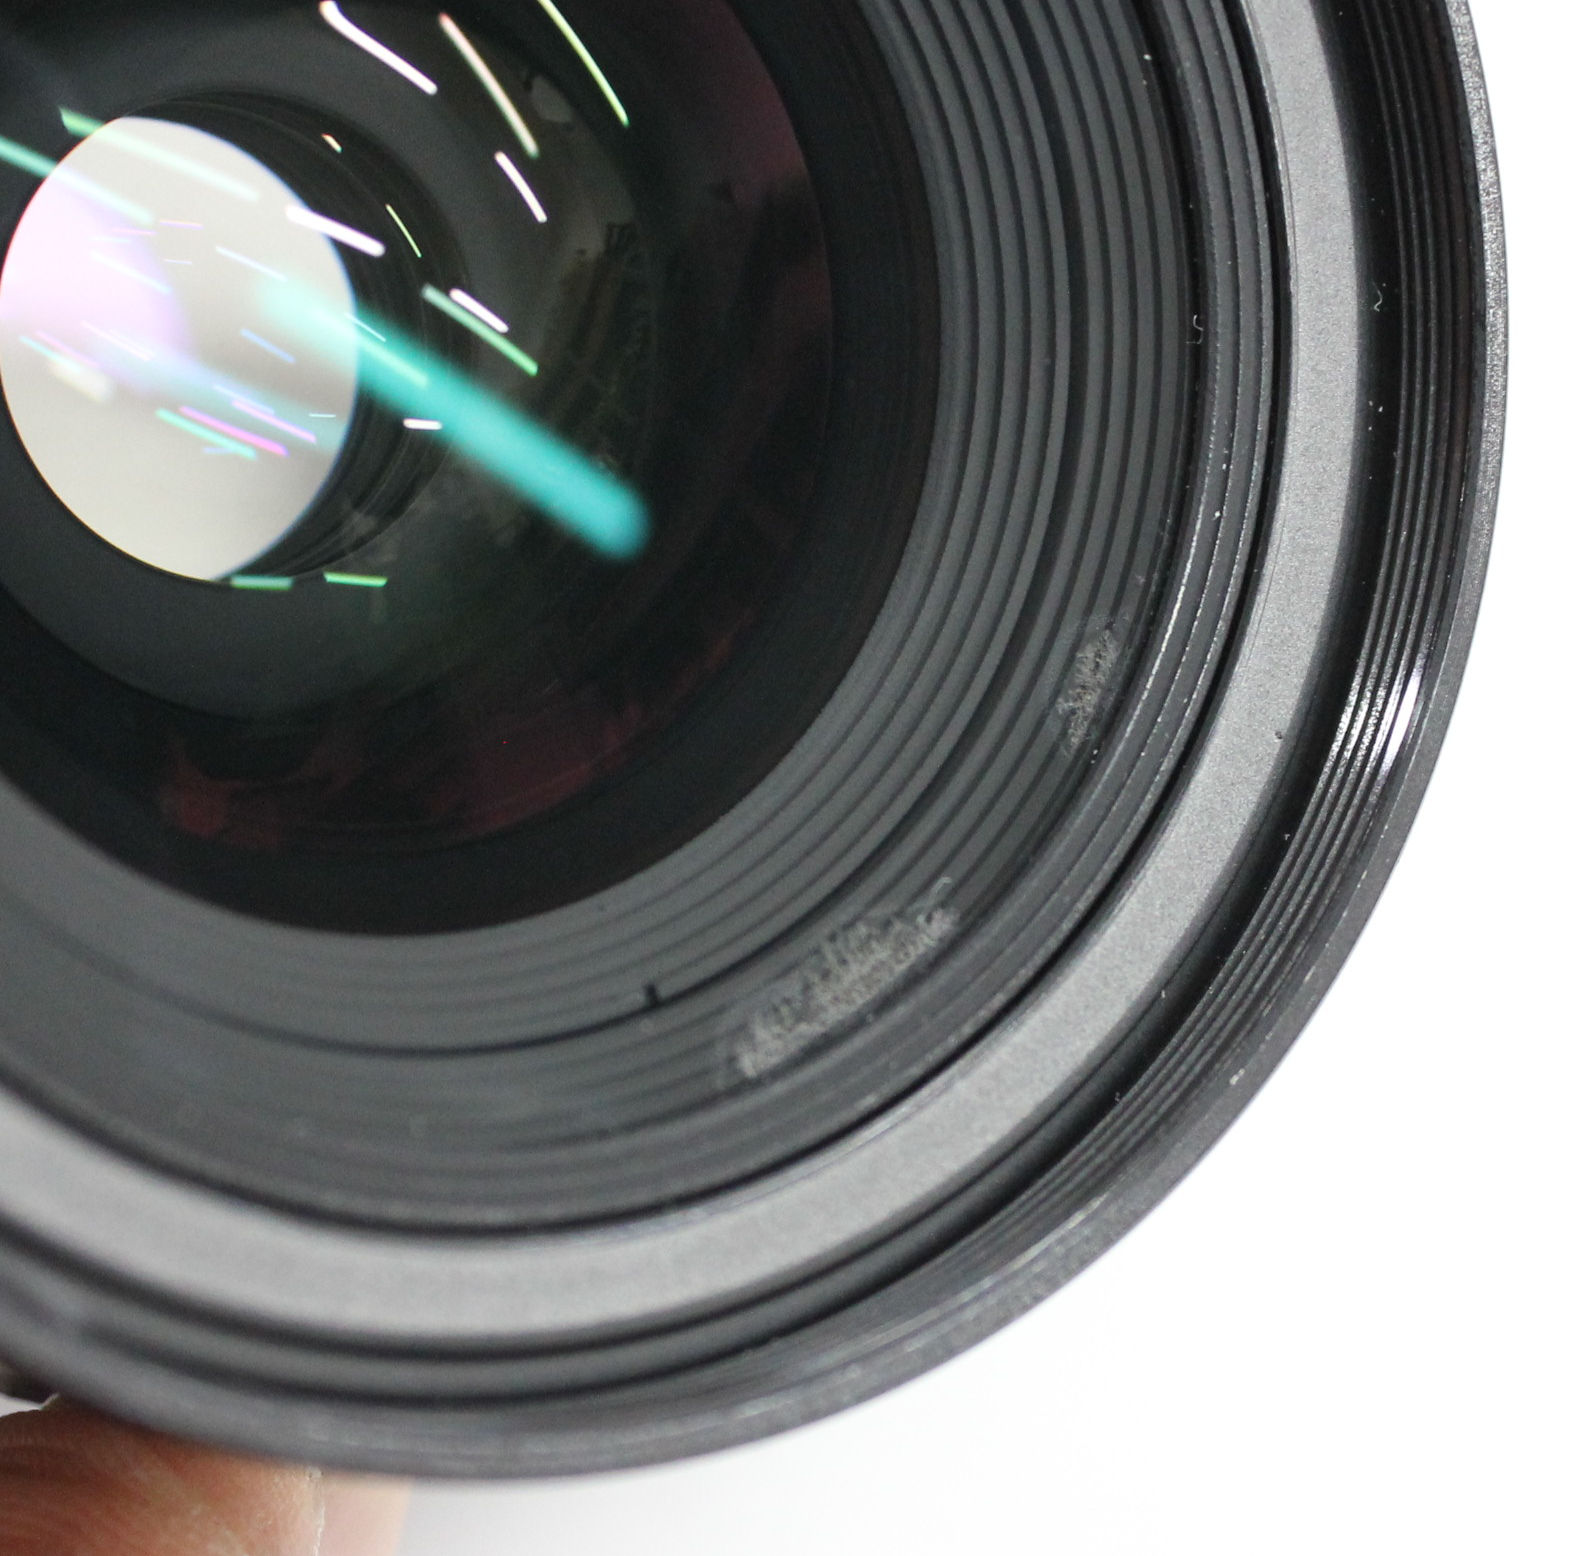  Pentax SMC Pentax-A 645 45mm F/2.8 MF Lens from Japan Photo 8